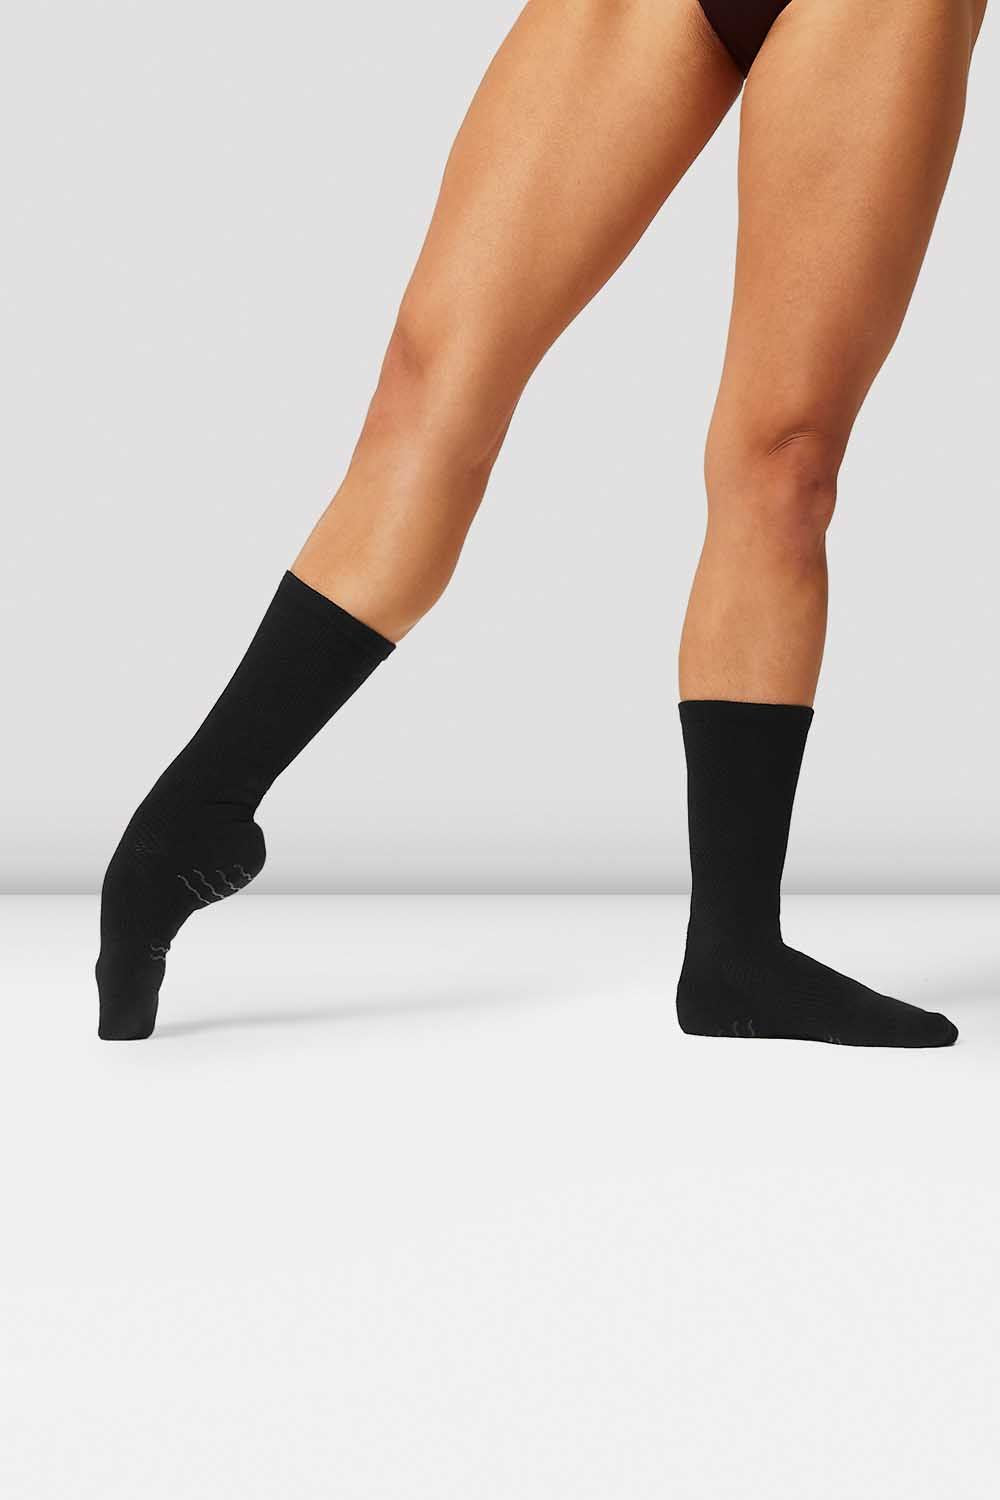 Blochsox Dance Socks, Black – BLOCH Dance US